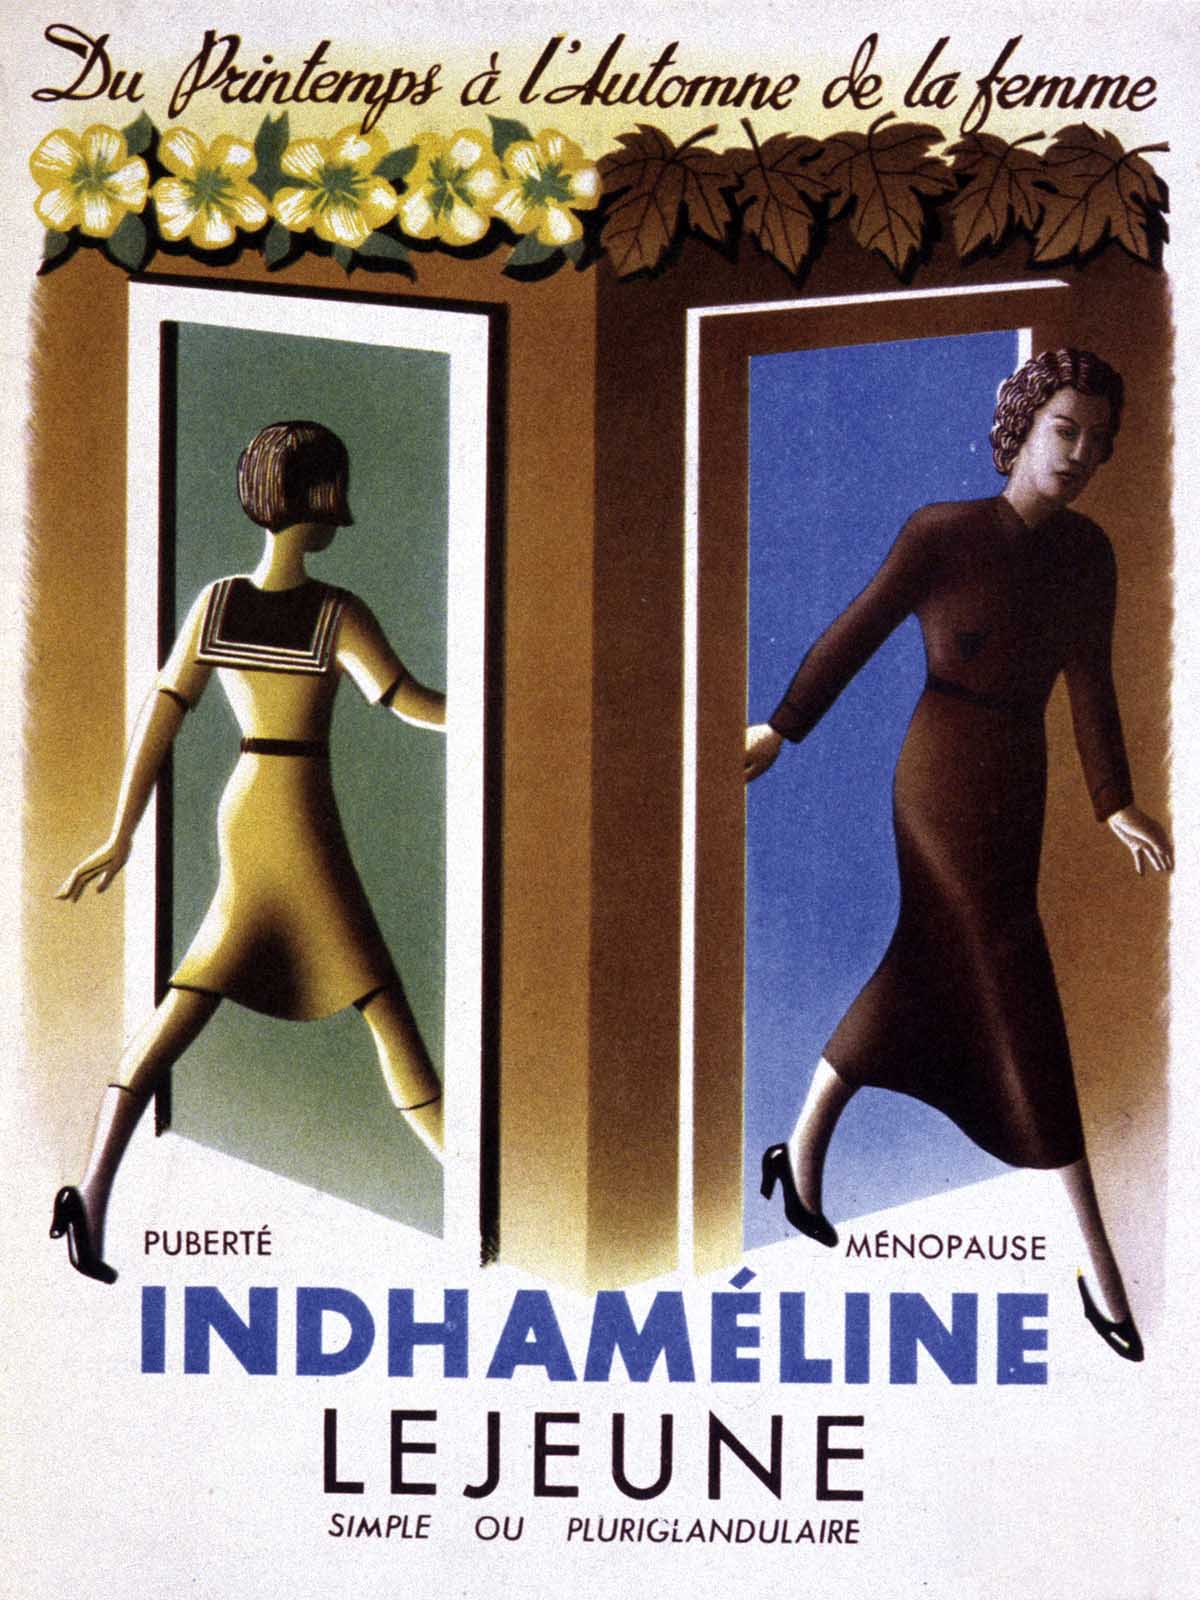 French advertisement for indhaméline hormone, c.1930-40. Bridgeman Images.